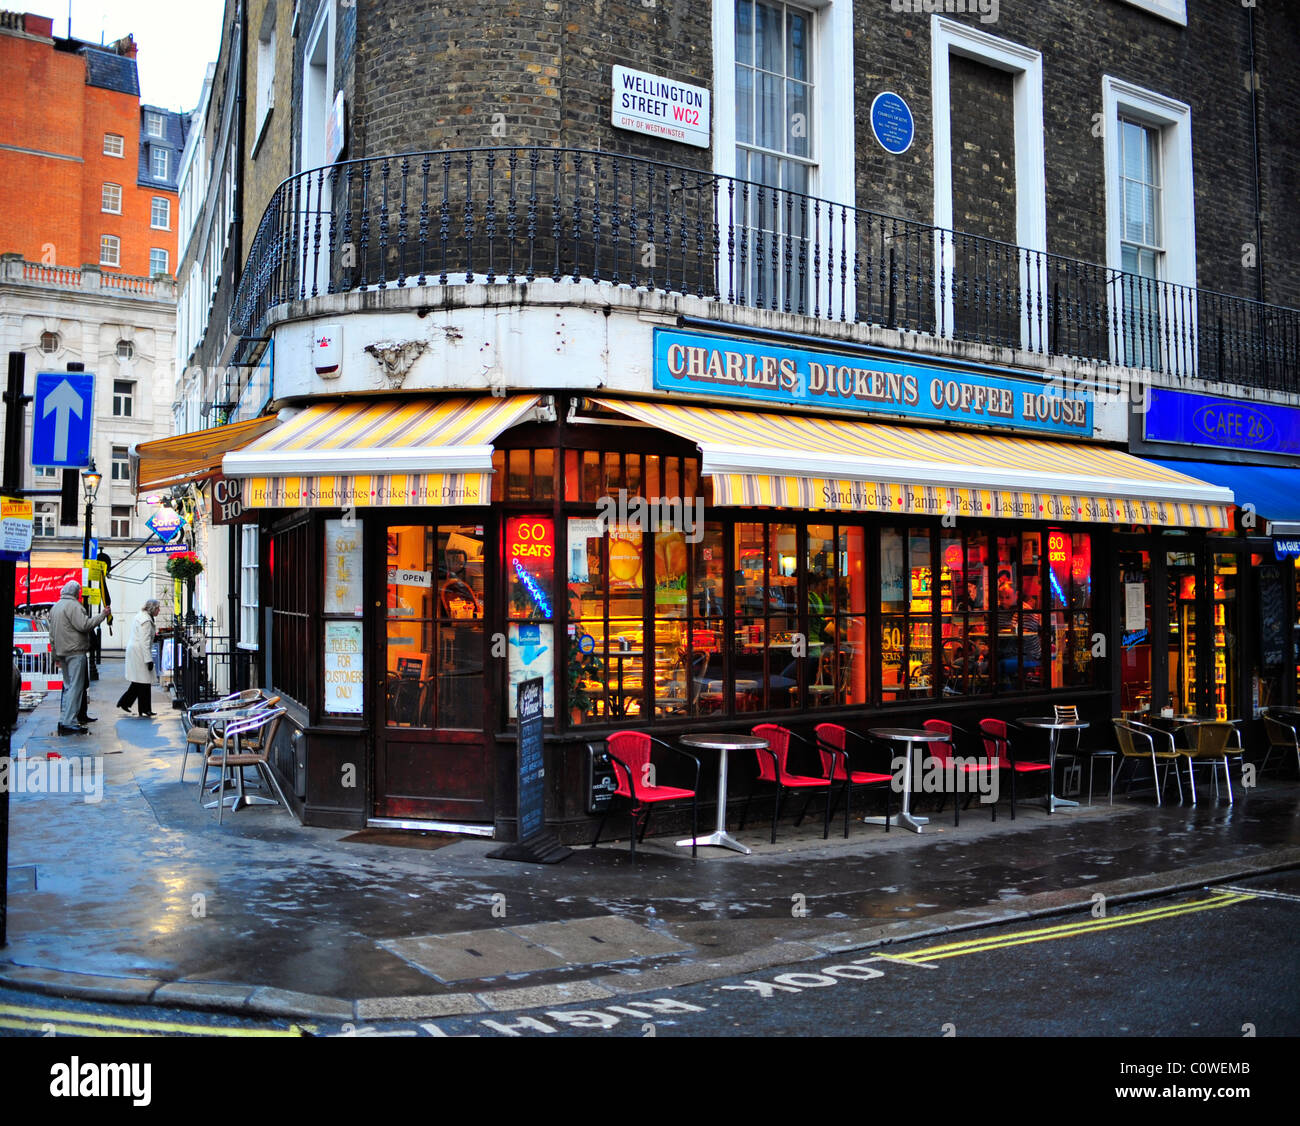 Charles Dickens Coffee House sur la rue Wellington, Londres Banque D'Images